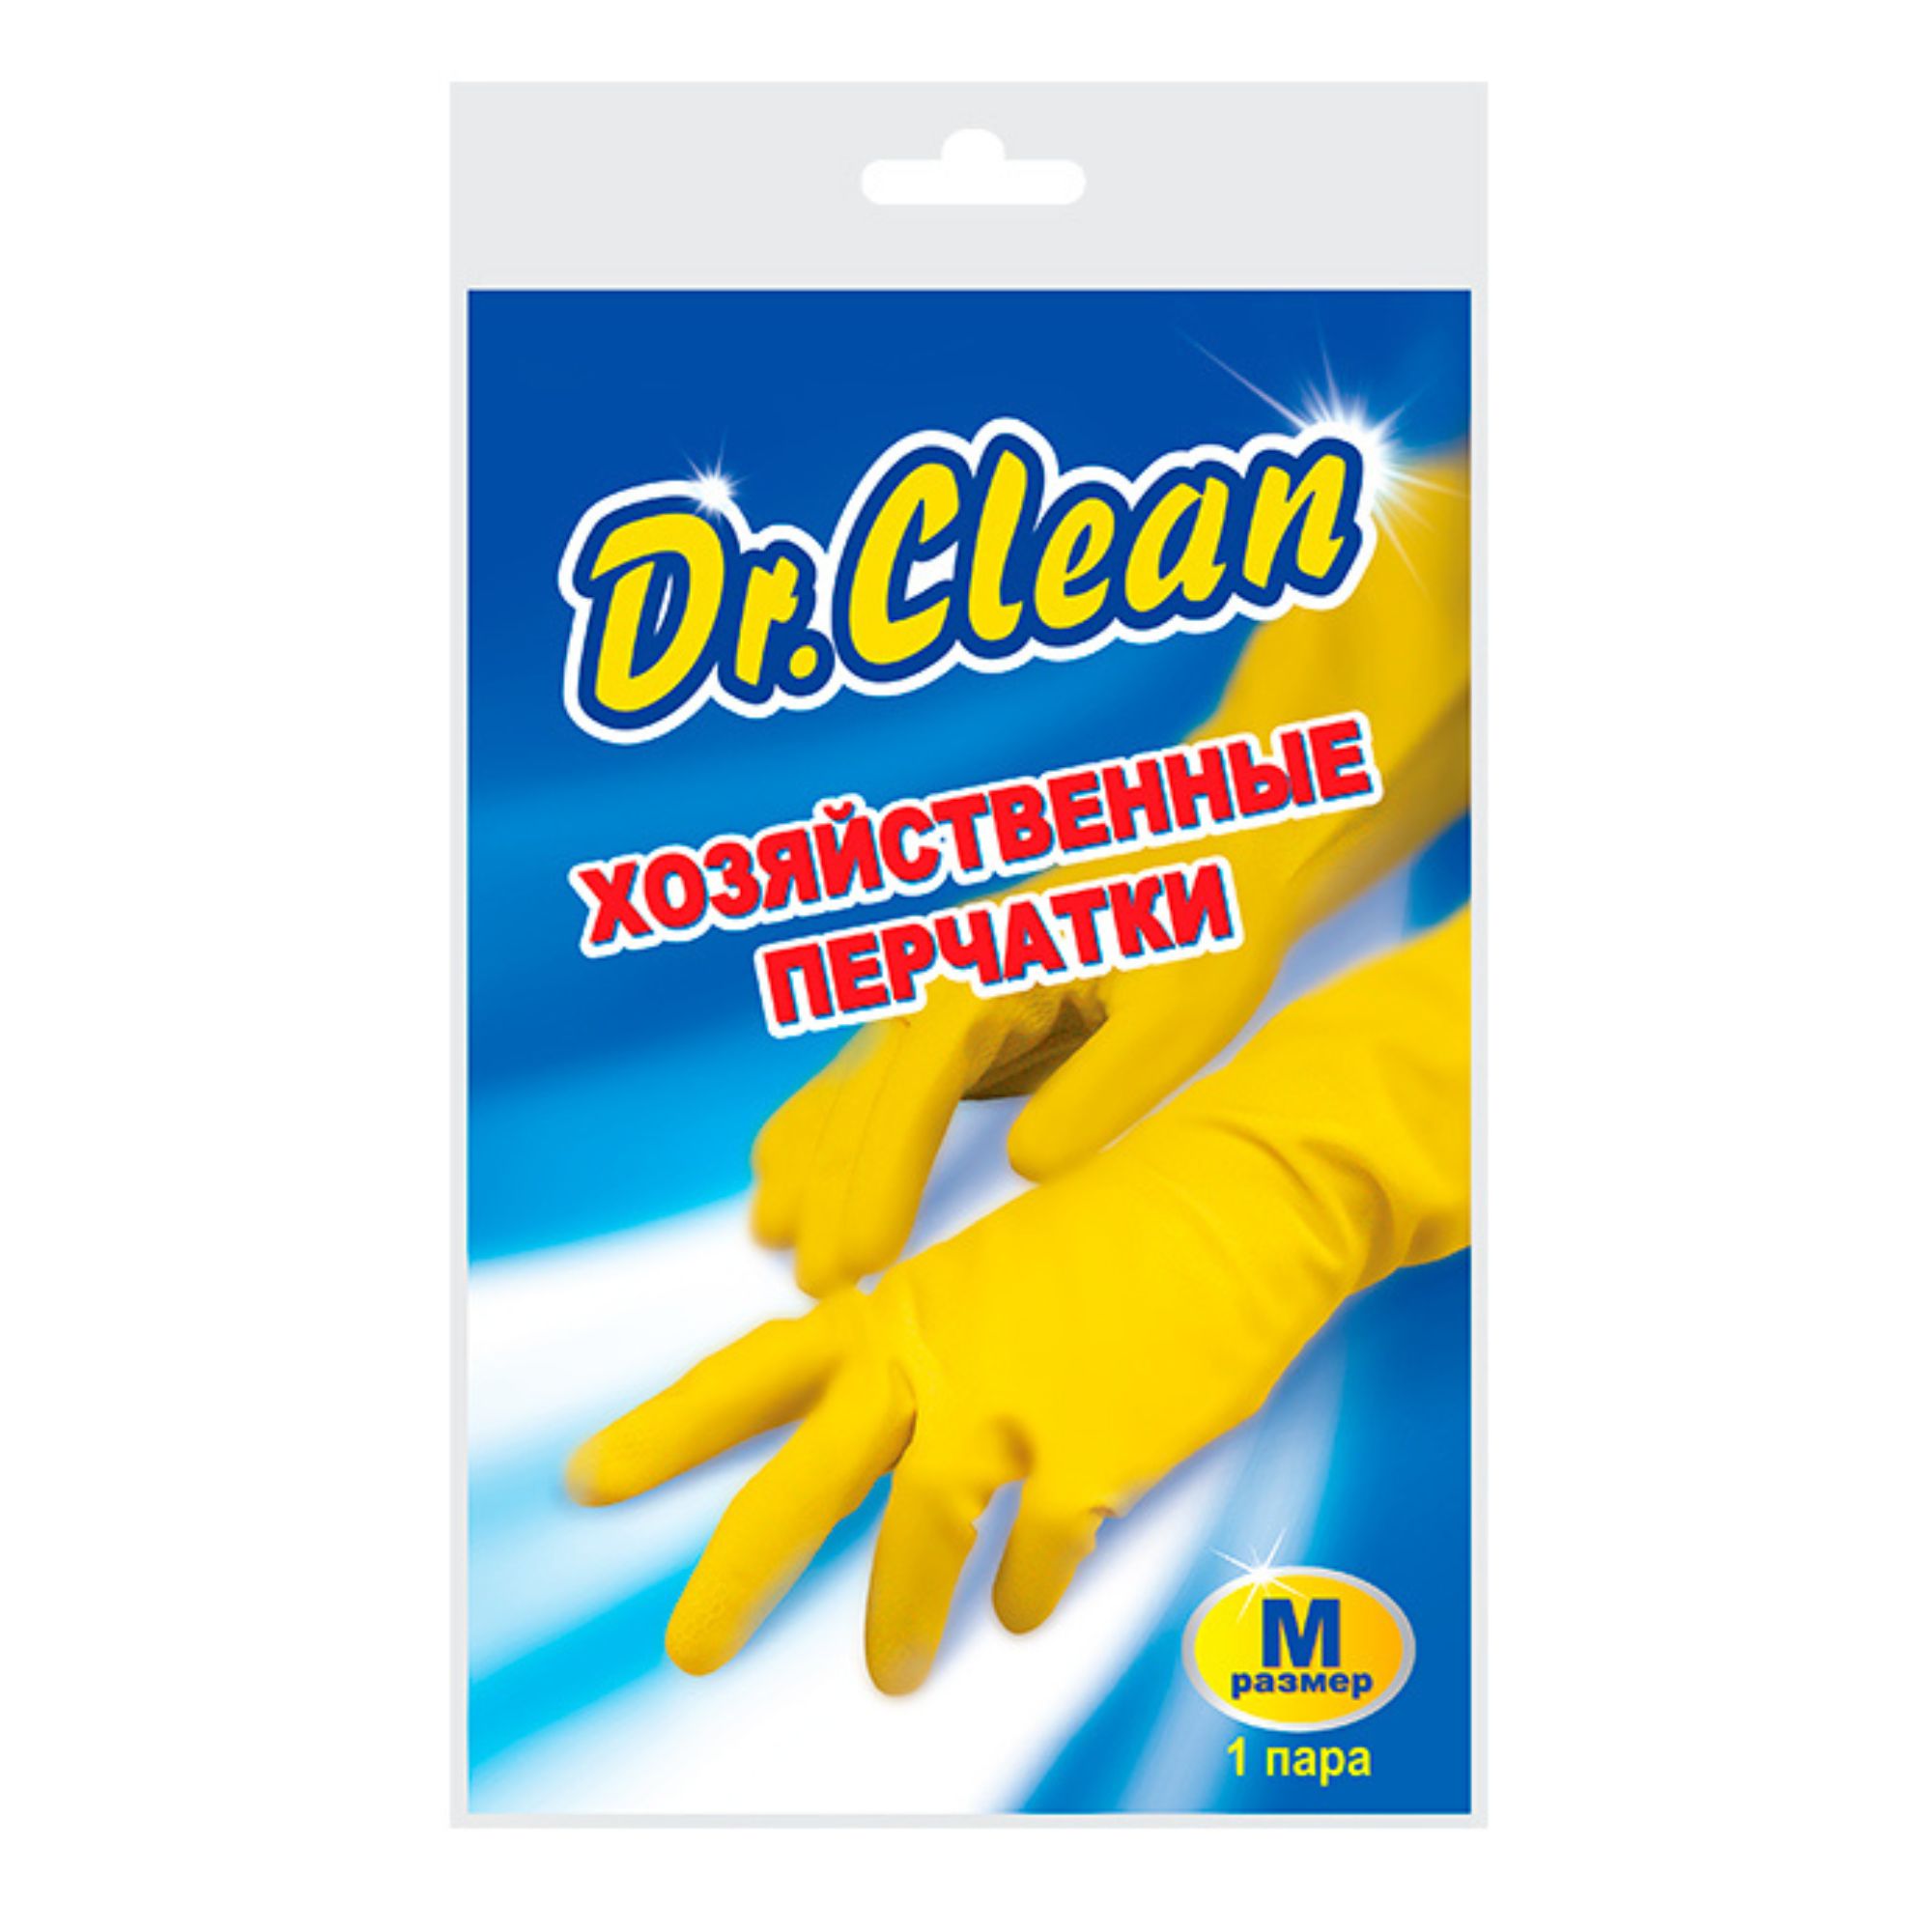 Перчатки хозяйственные Dr. Clean резиновые 4 пары размер M - фото 6